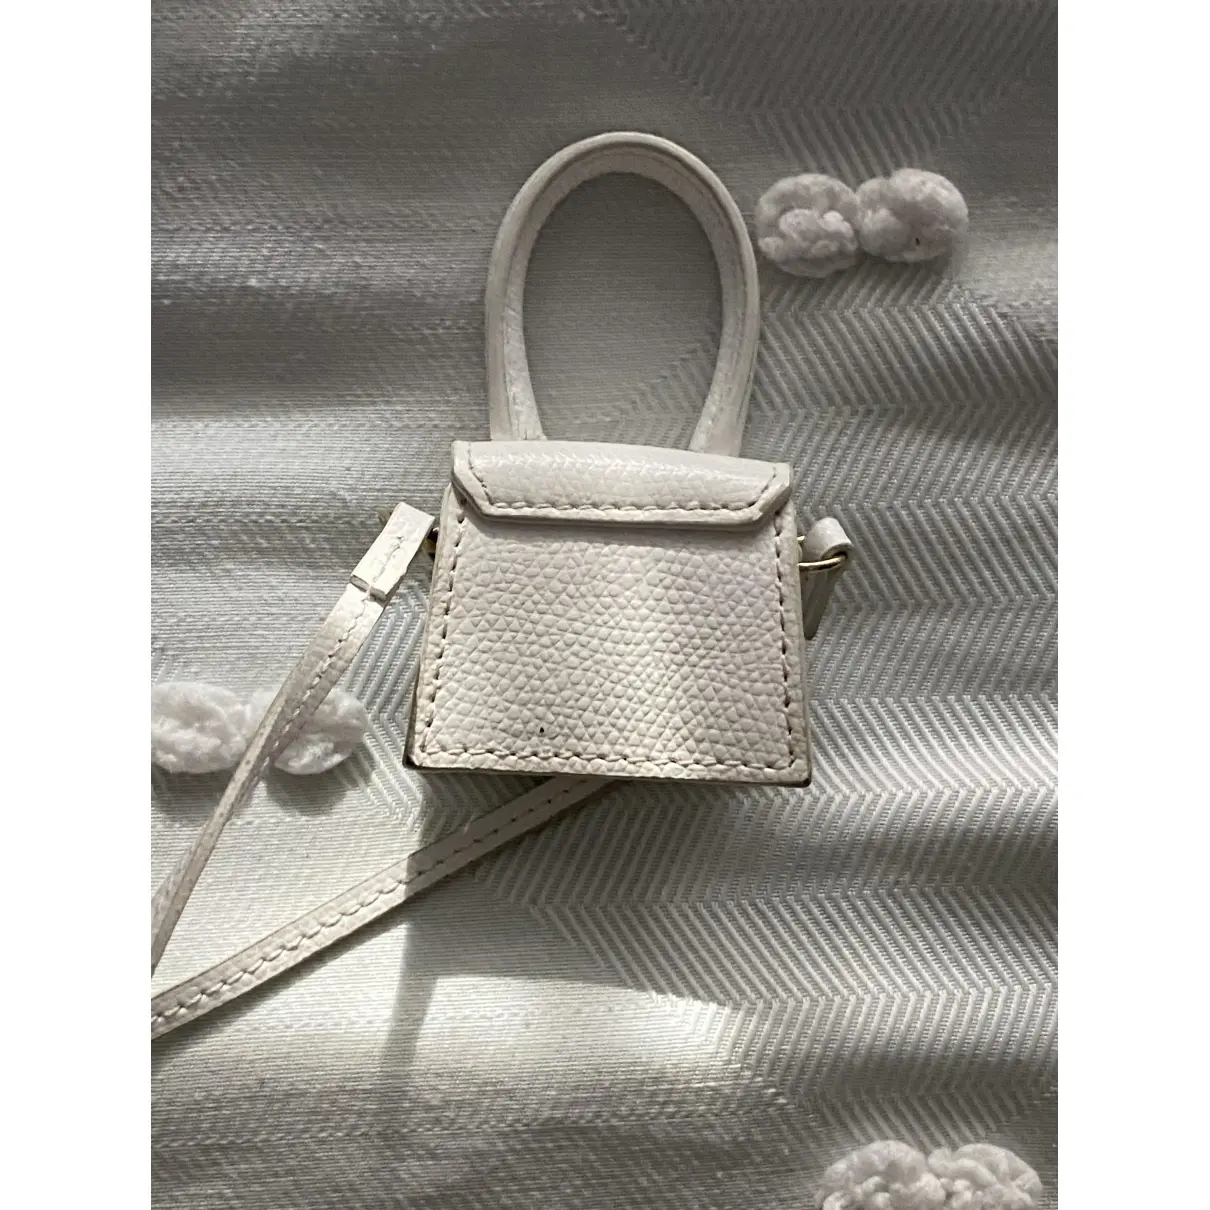 Buy Jacquemus Le Petit Chiquito leather handbag online